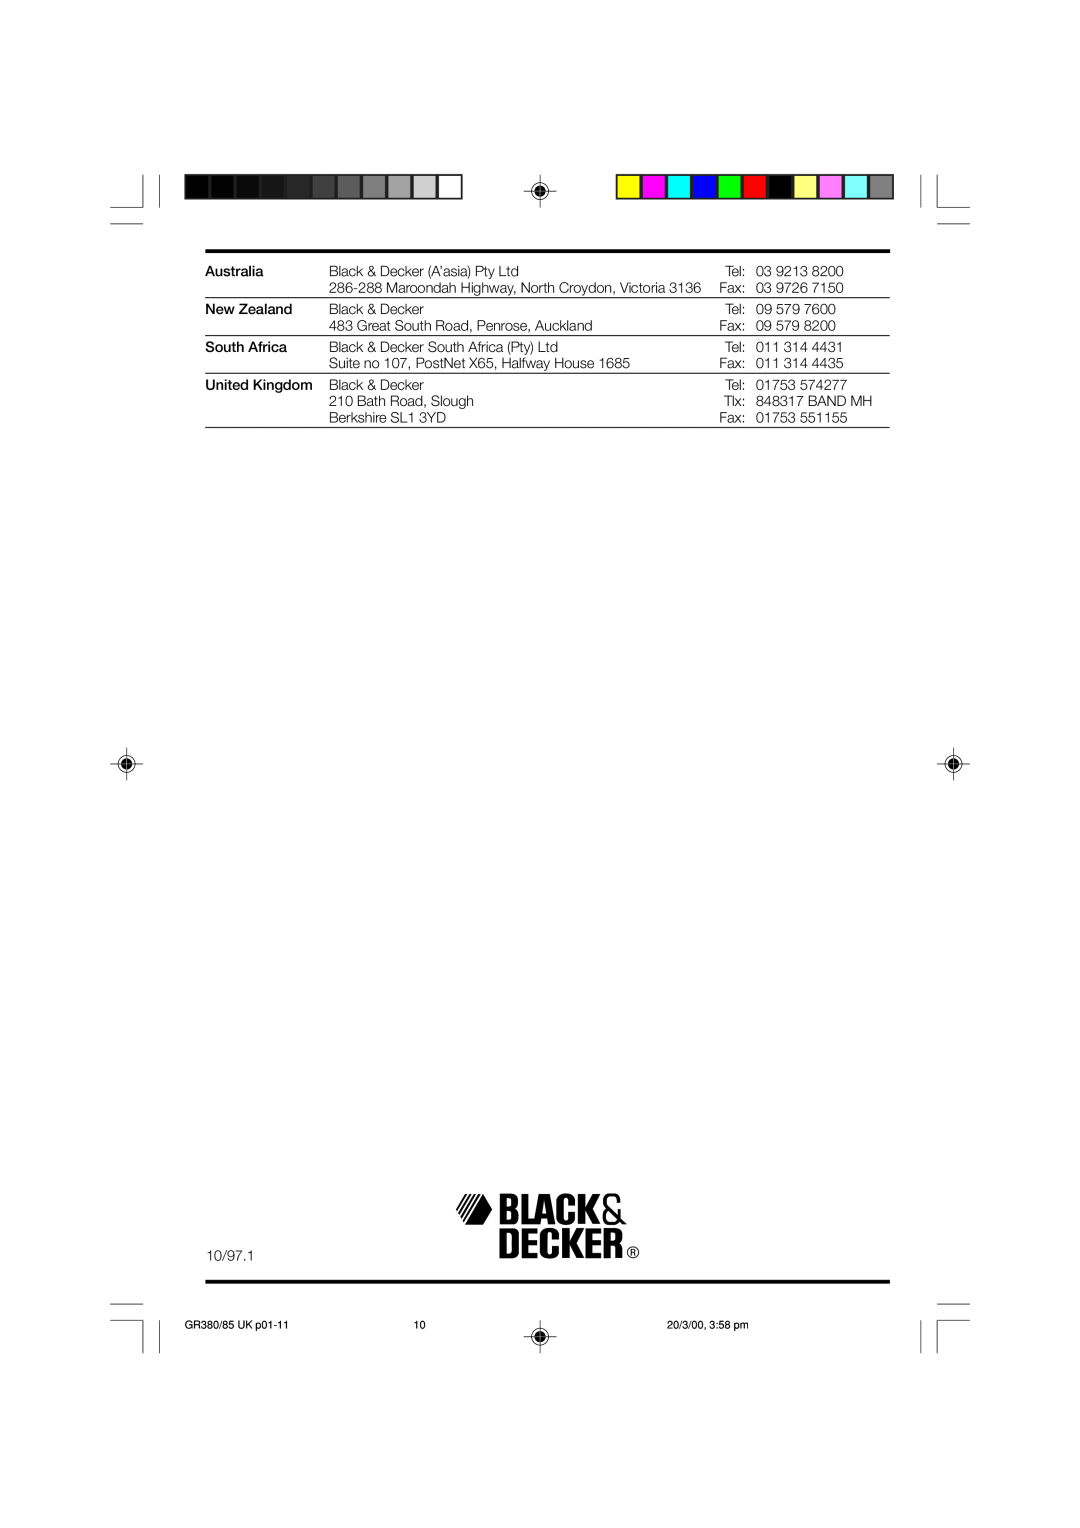 Black & Decker GR385, GR380/85 manual Australia 